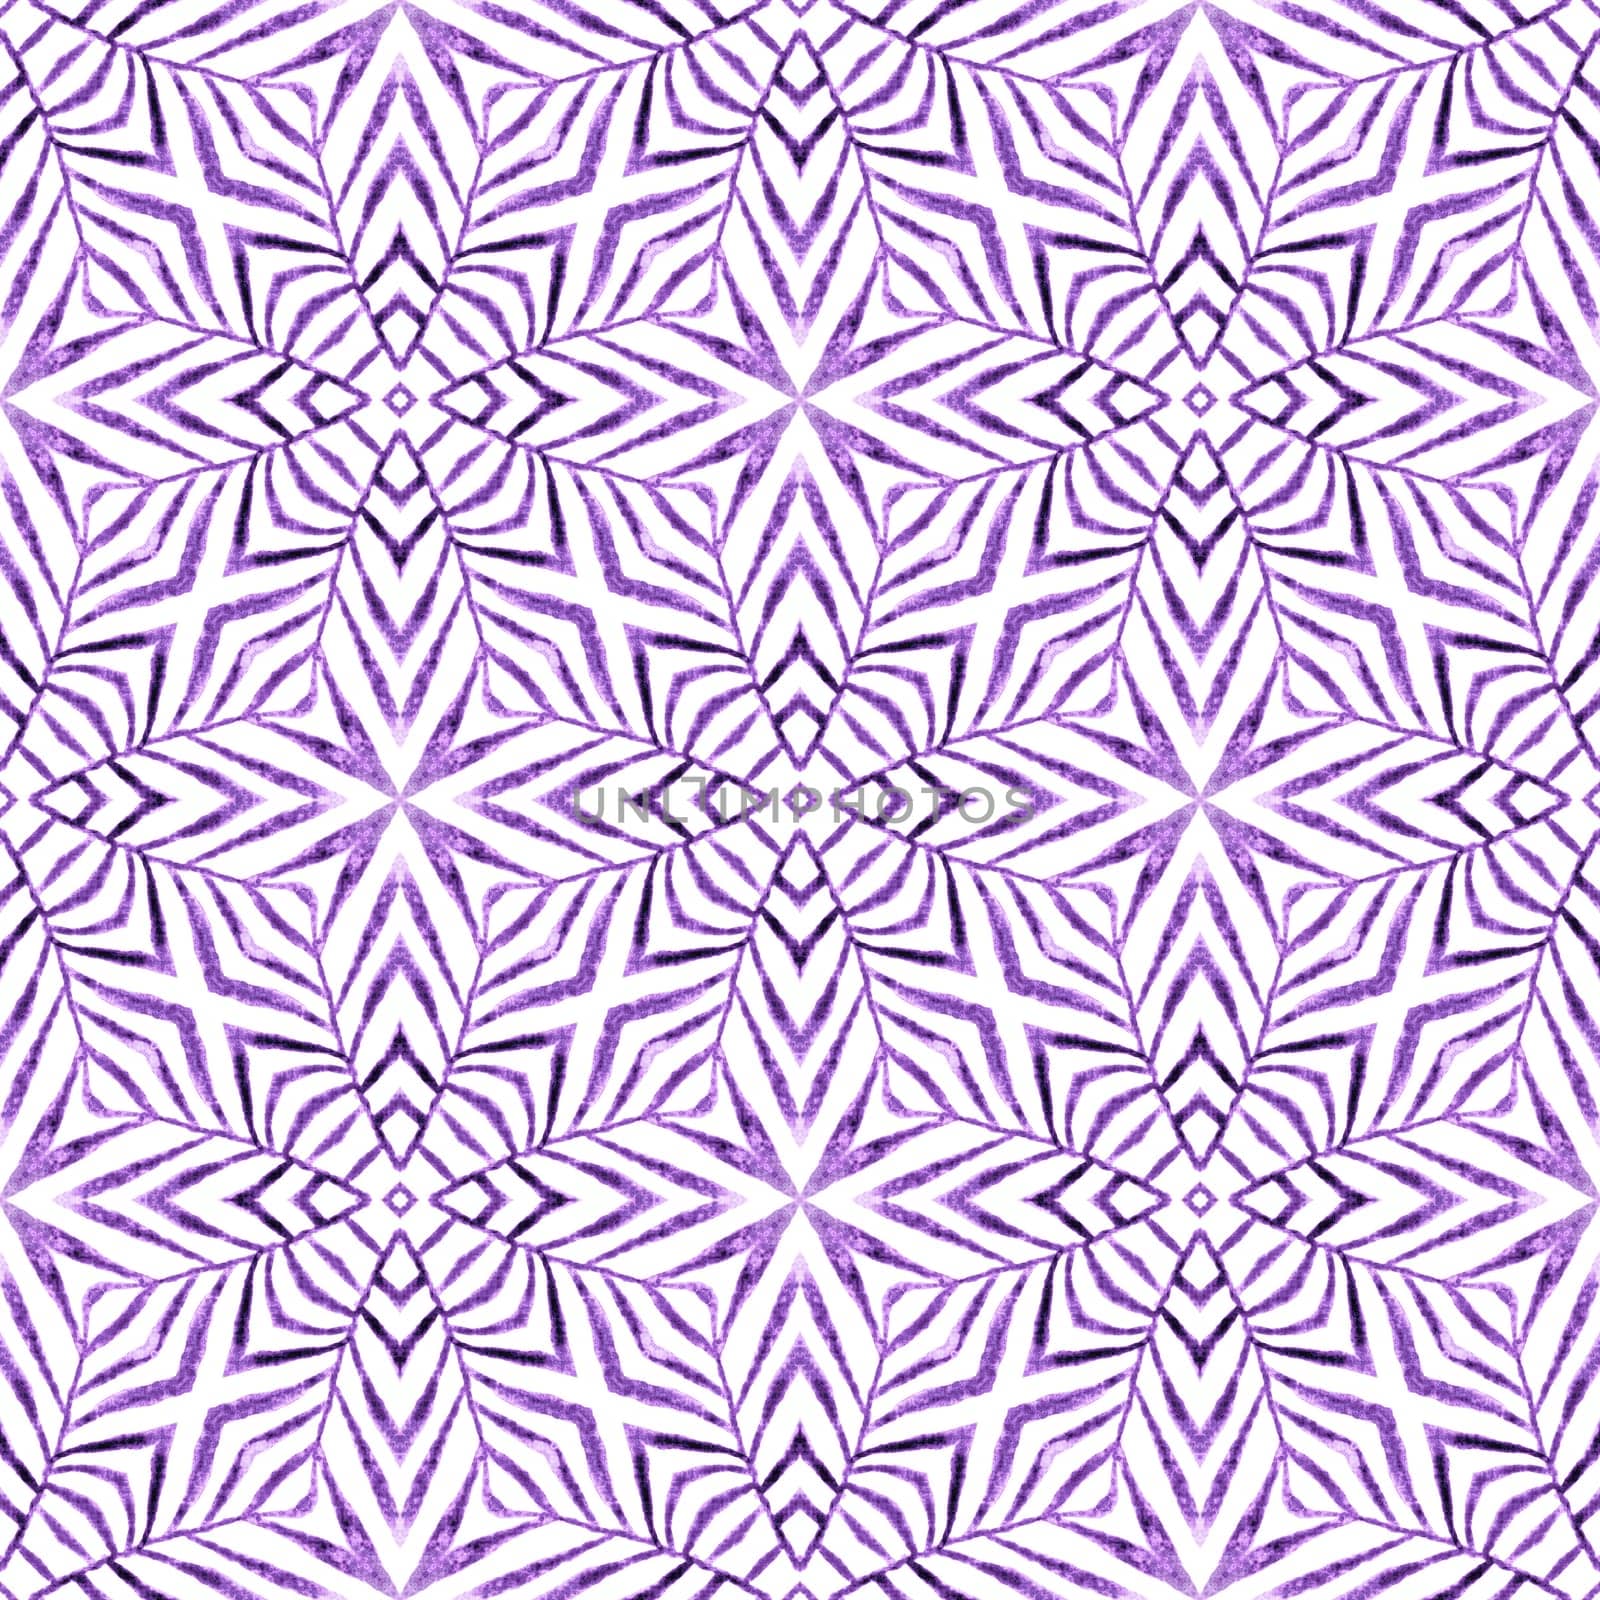 Textile ready resplendent print, swimwear fabric, wallpaper, wrapping. Purple superb boho chic summer design. Green geometric chevron watercolor border. Chevron watercolor pattern.